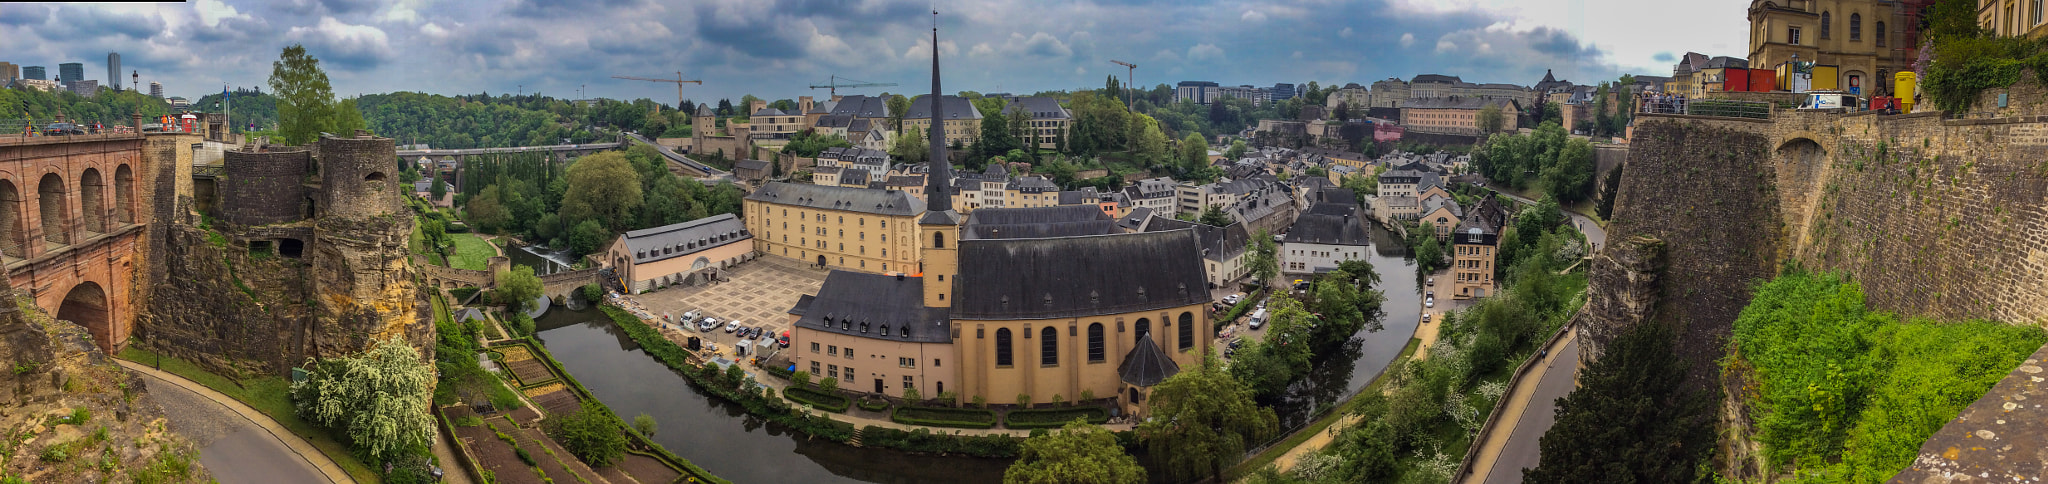 Apple iPad mini 2 sample photo. St jean du grund, luxembourg city. photography